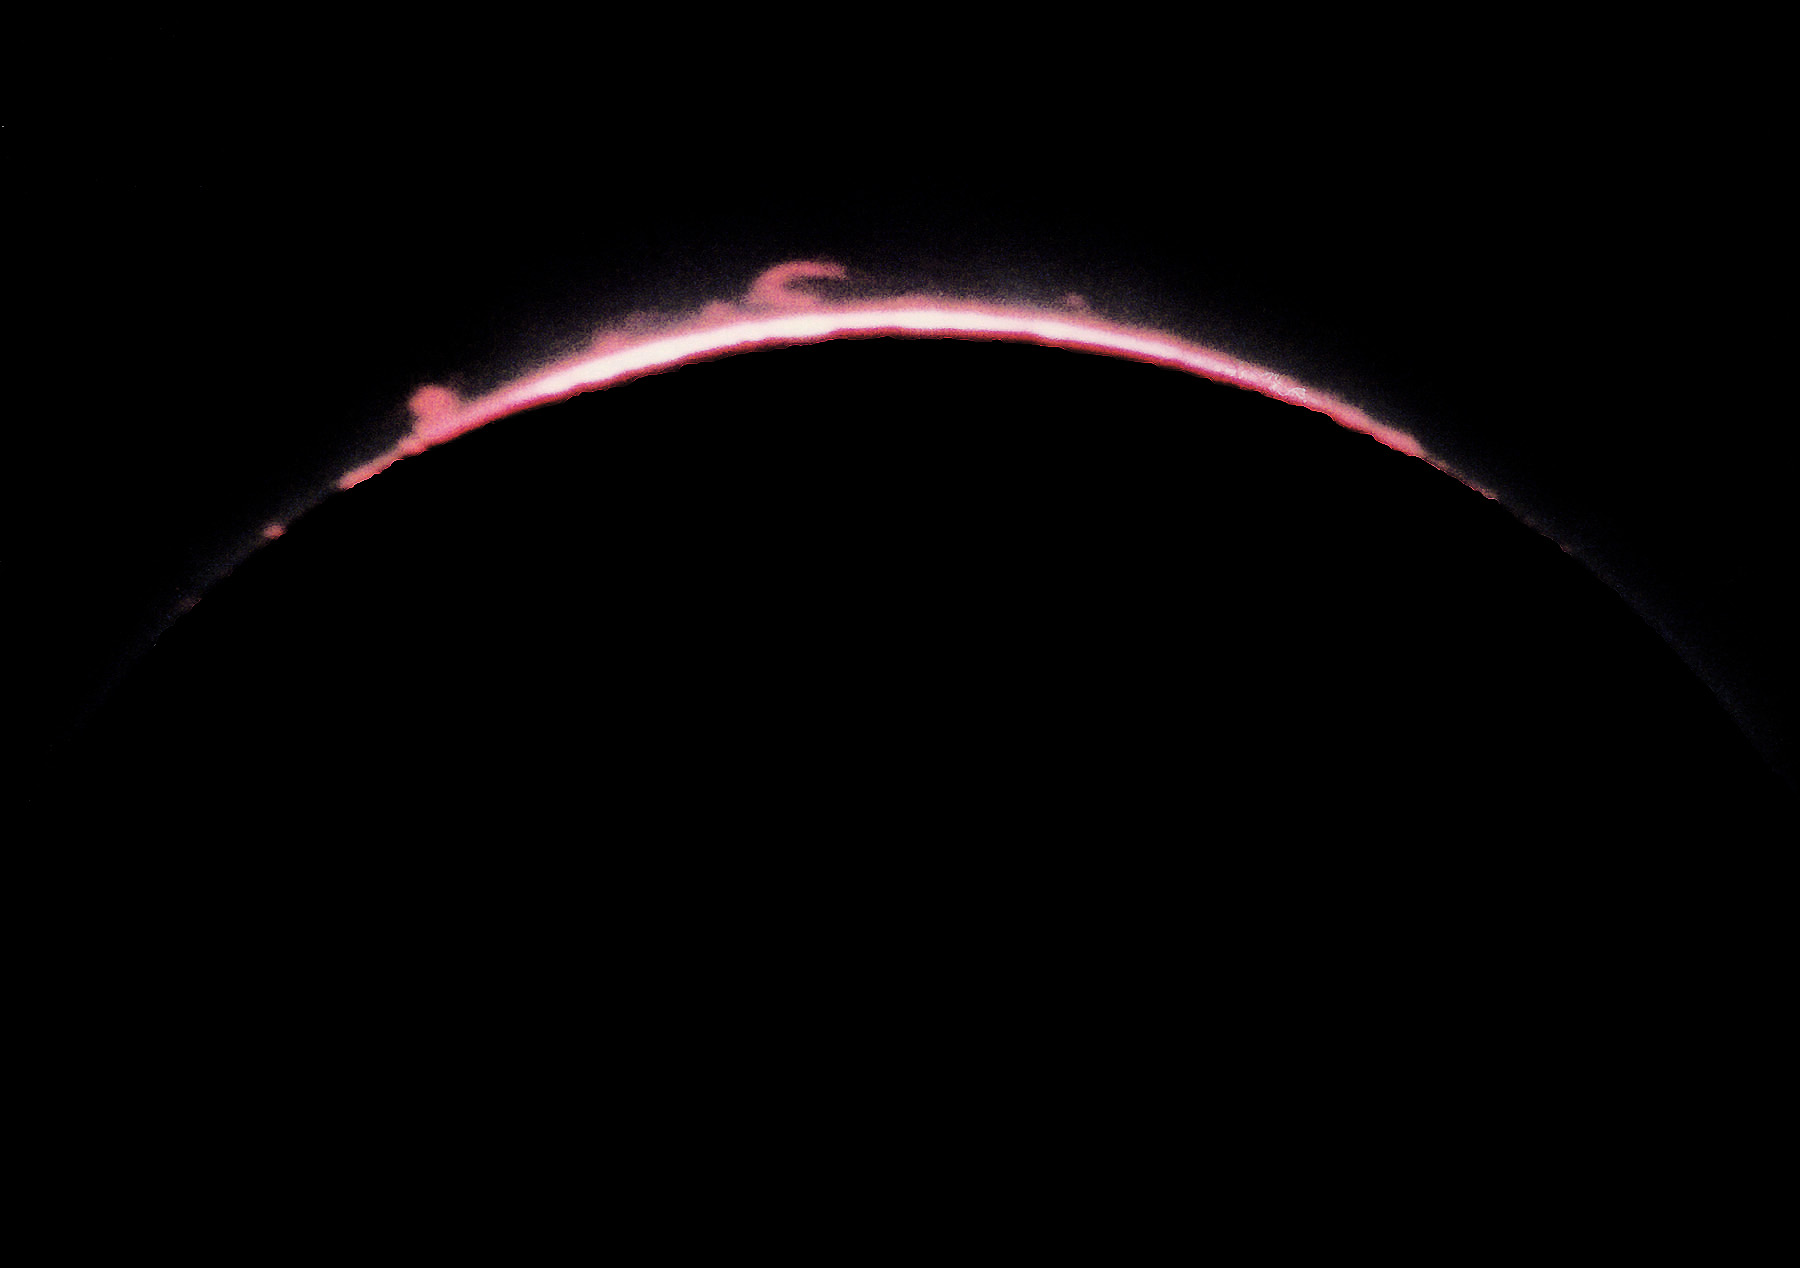 Eclipse 1994 - A66 - Prominences